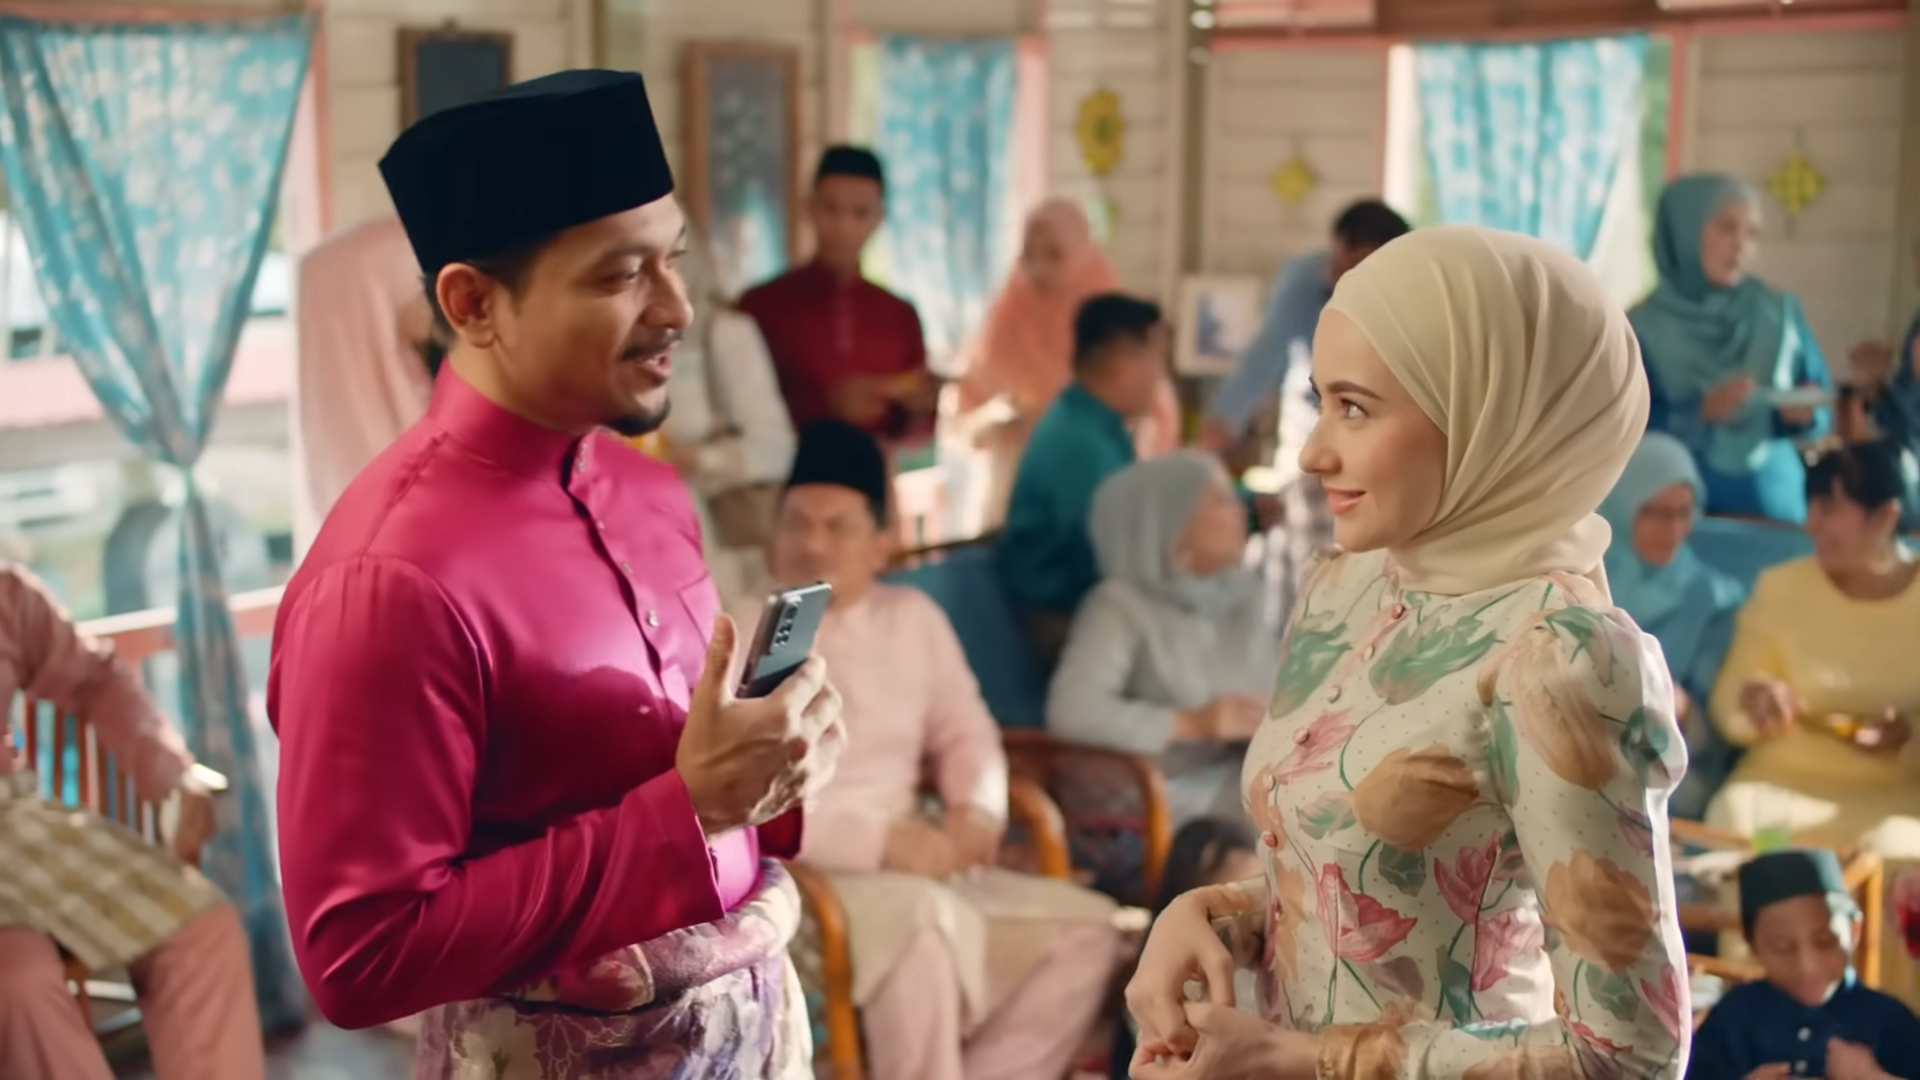 Malaysian local clothing line Bulan Bintang releases maiden brand film for Raya via MBCS